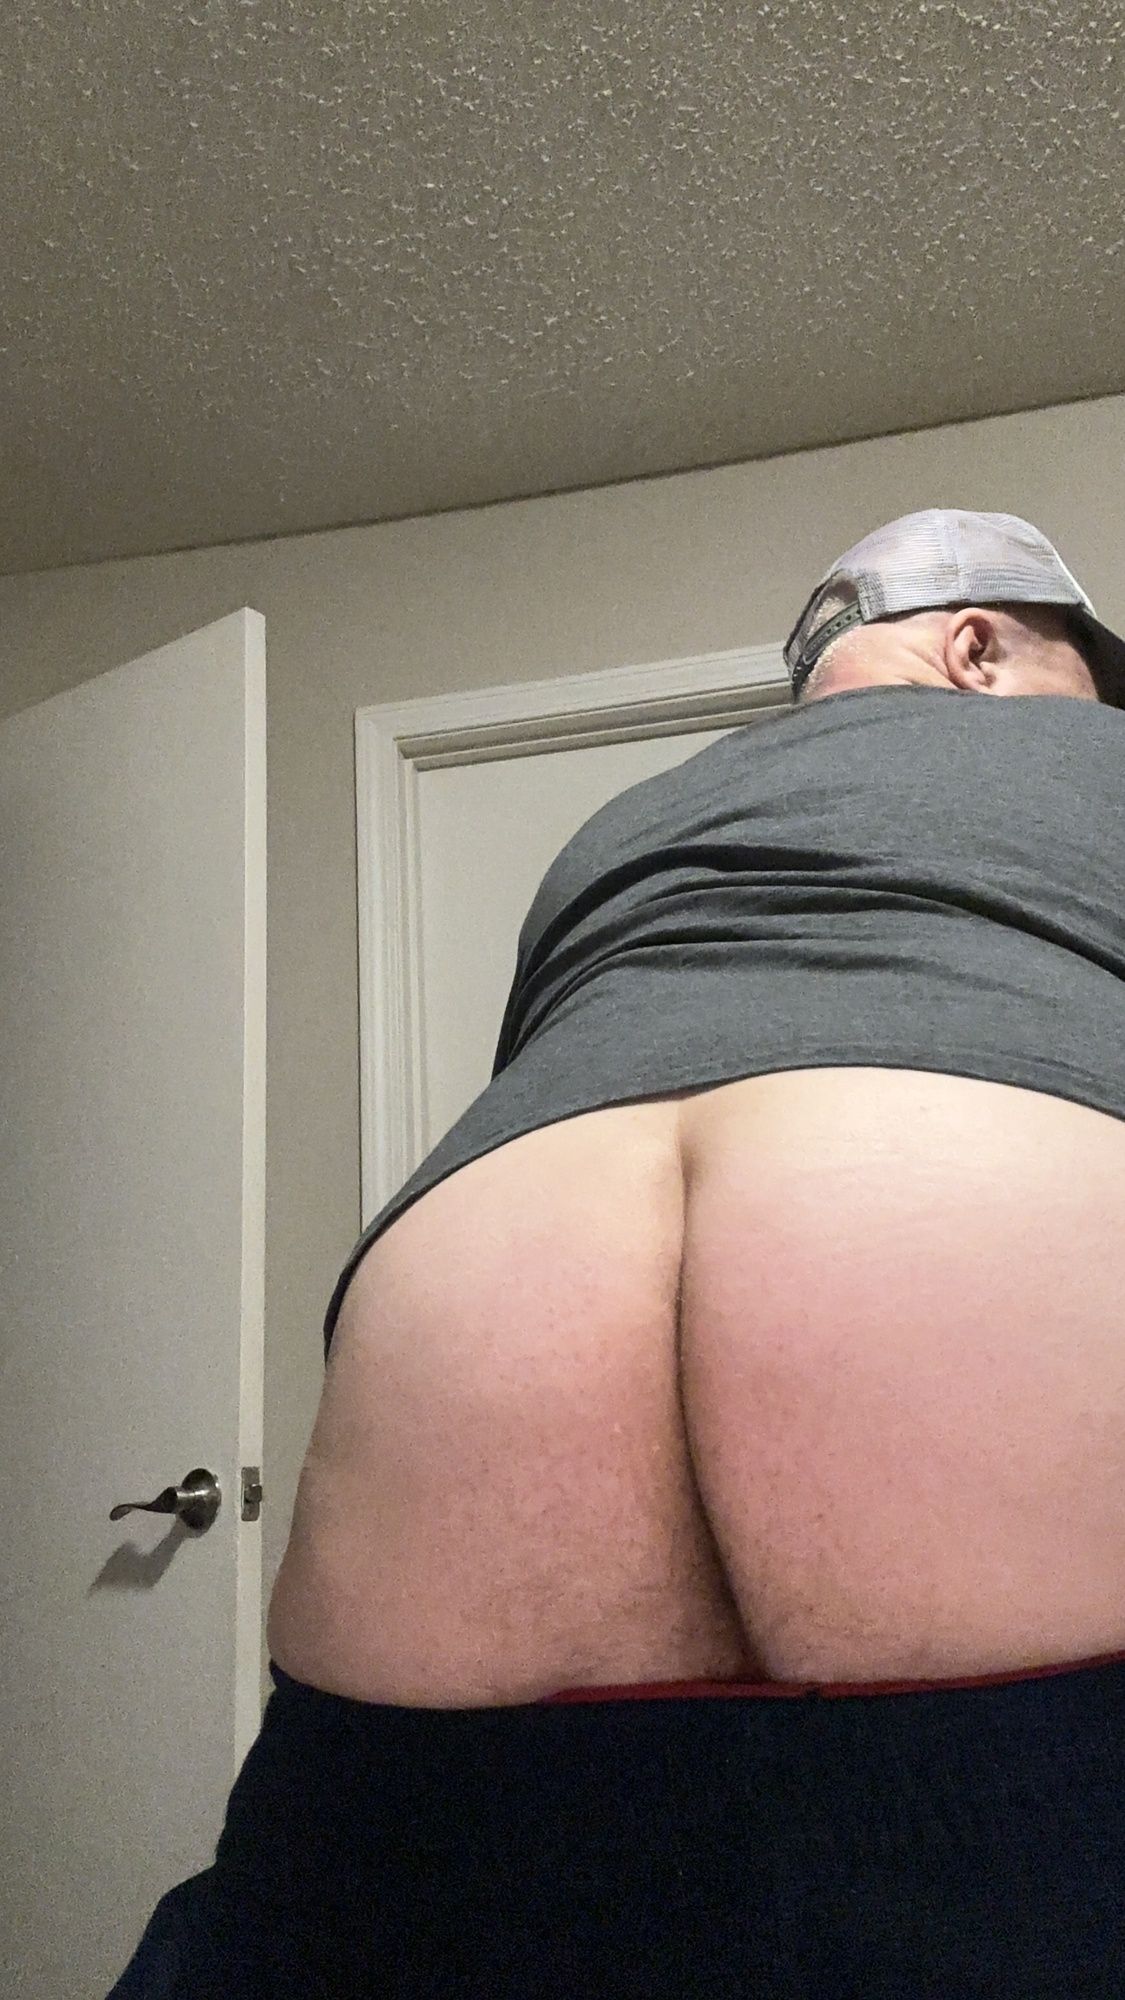 My Bubble butt #12